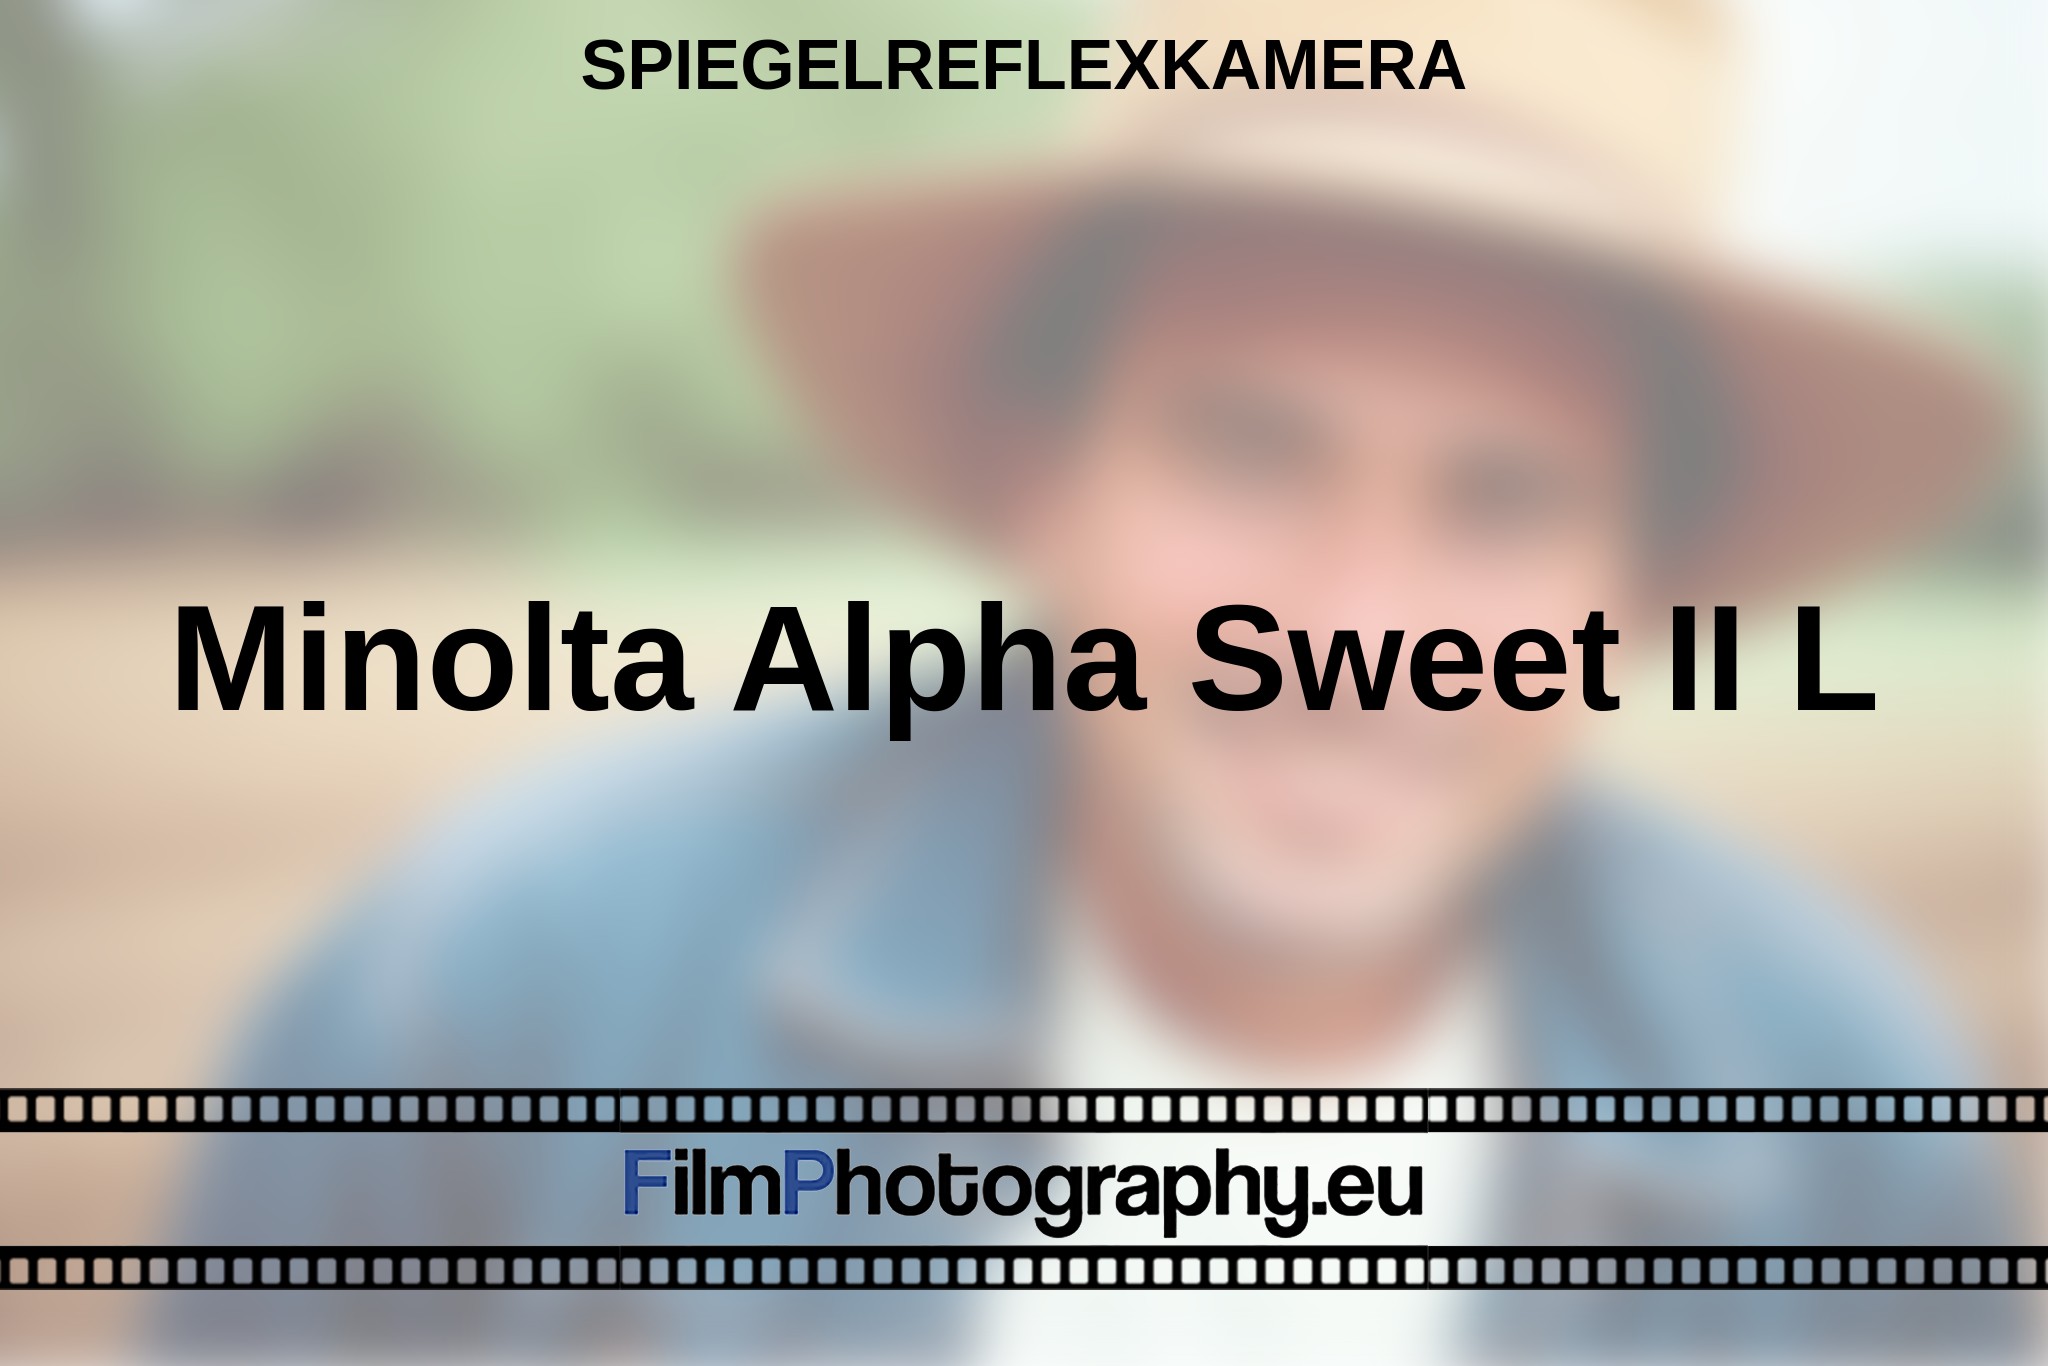 minolta-alpha-sweet-ii-l-spiegelreflexkamera-bnv.jpg